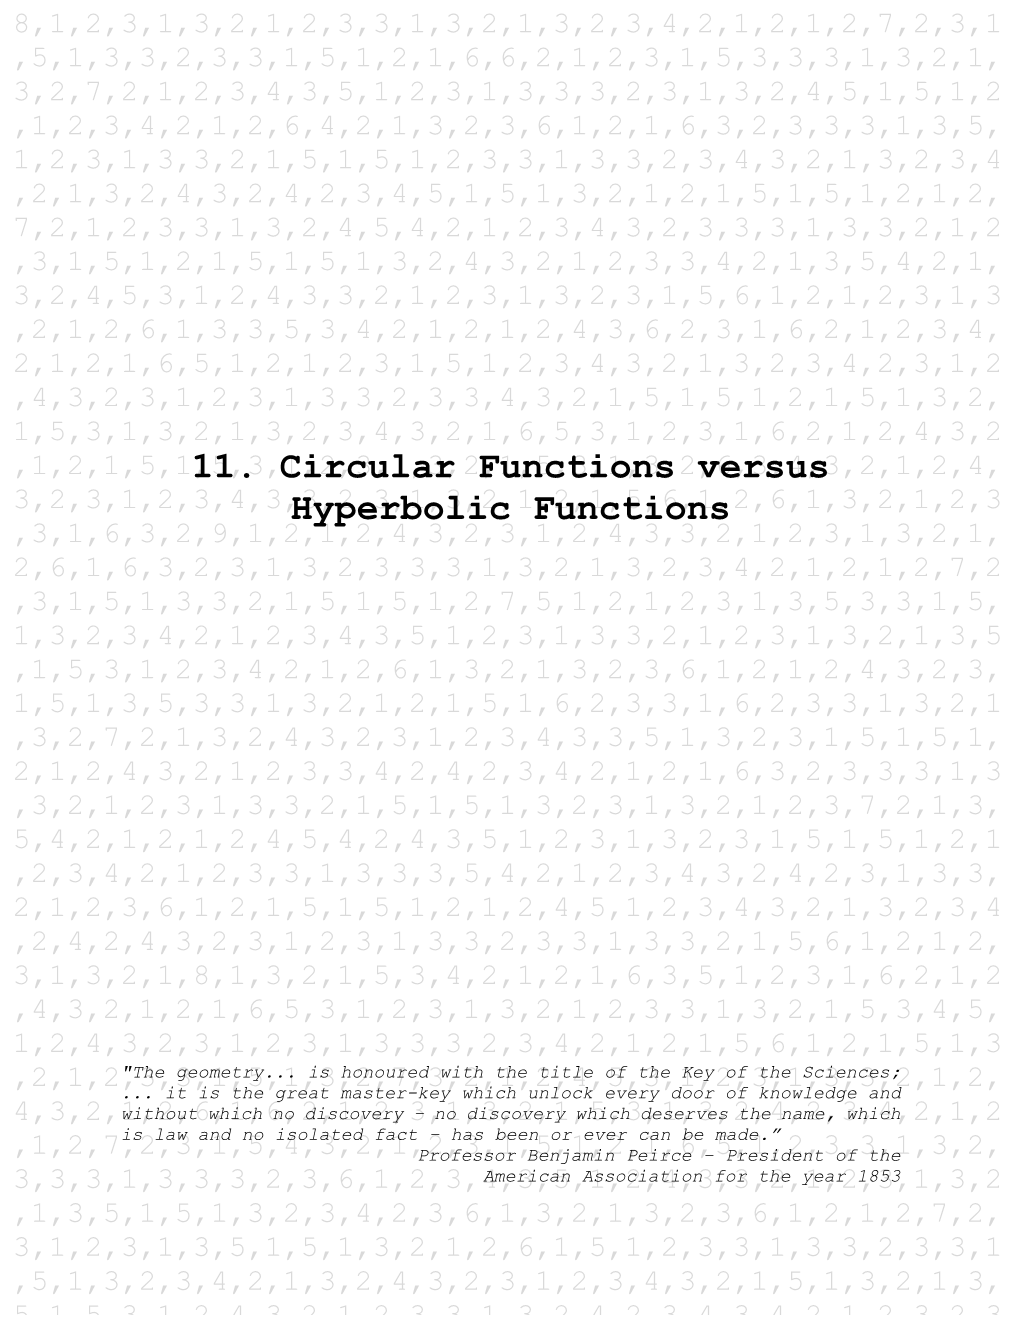 Circular Functions Versus Hyperbolic Functions